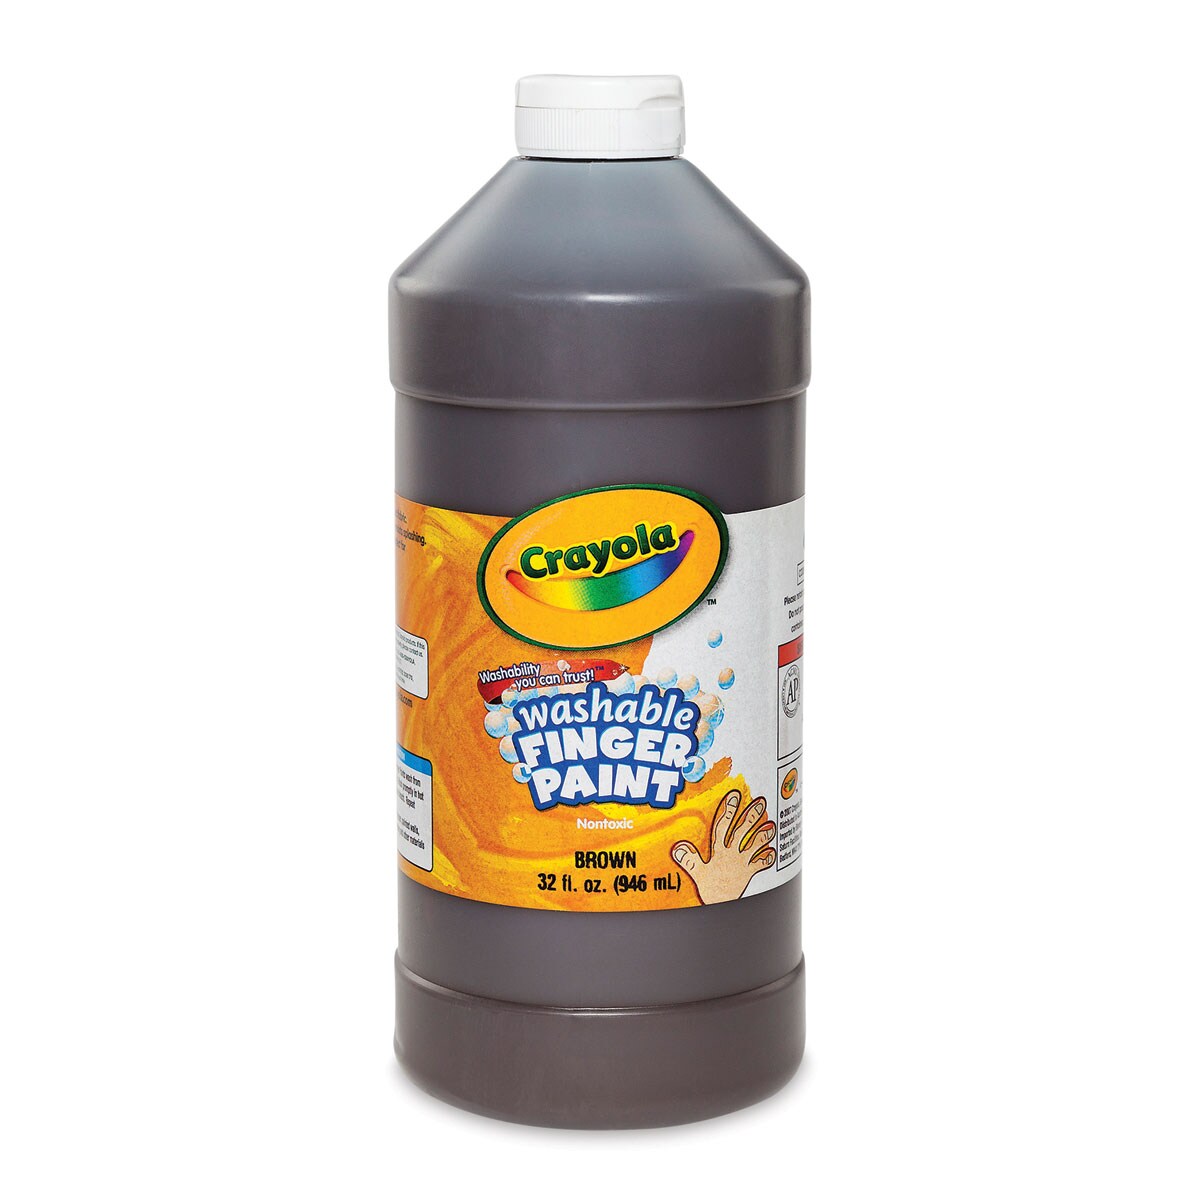 Crayola Washable Fingerpaint - Brown, 32 oz bottle